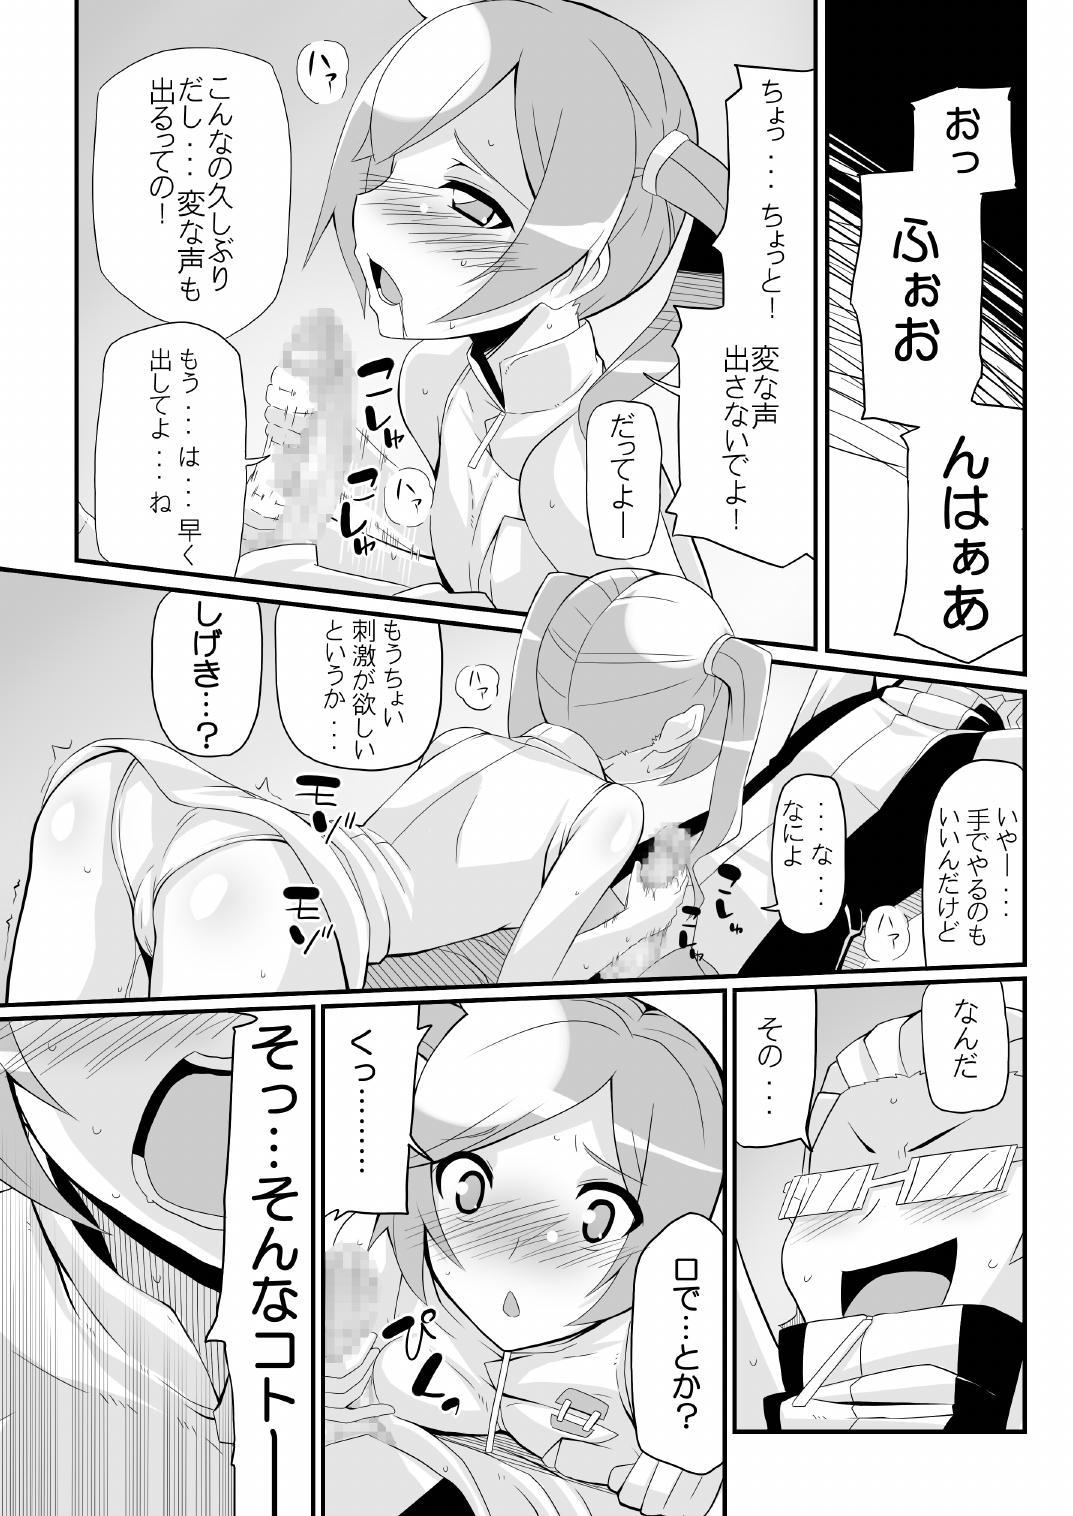 Teen Blowjob Re:Akiho/Rinatize Ero - Digimon Sapphic Erotica - Page 7